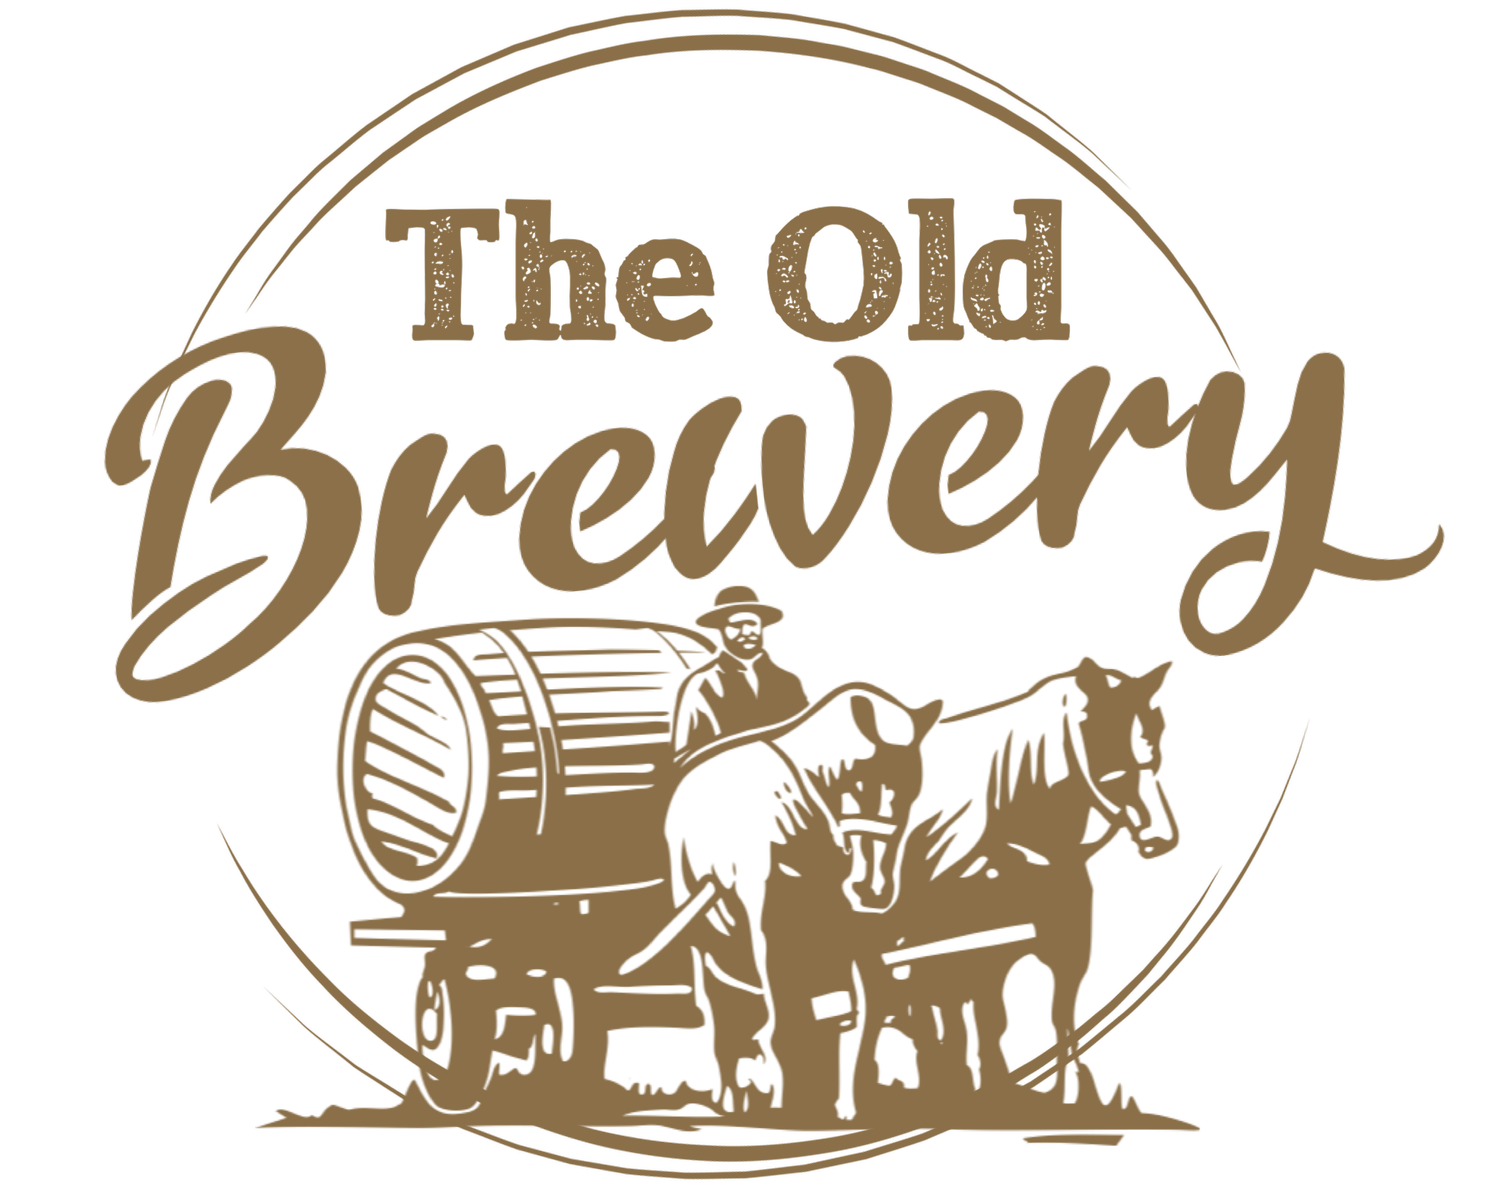 The Old Brewery - Broken Hill - Food - Drinks - Entertainment - Best Restaurant Broken Hill